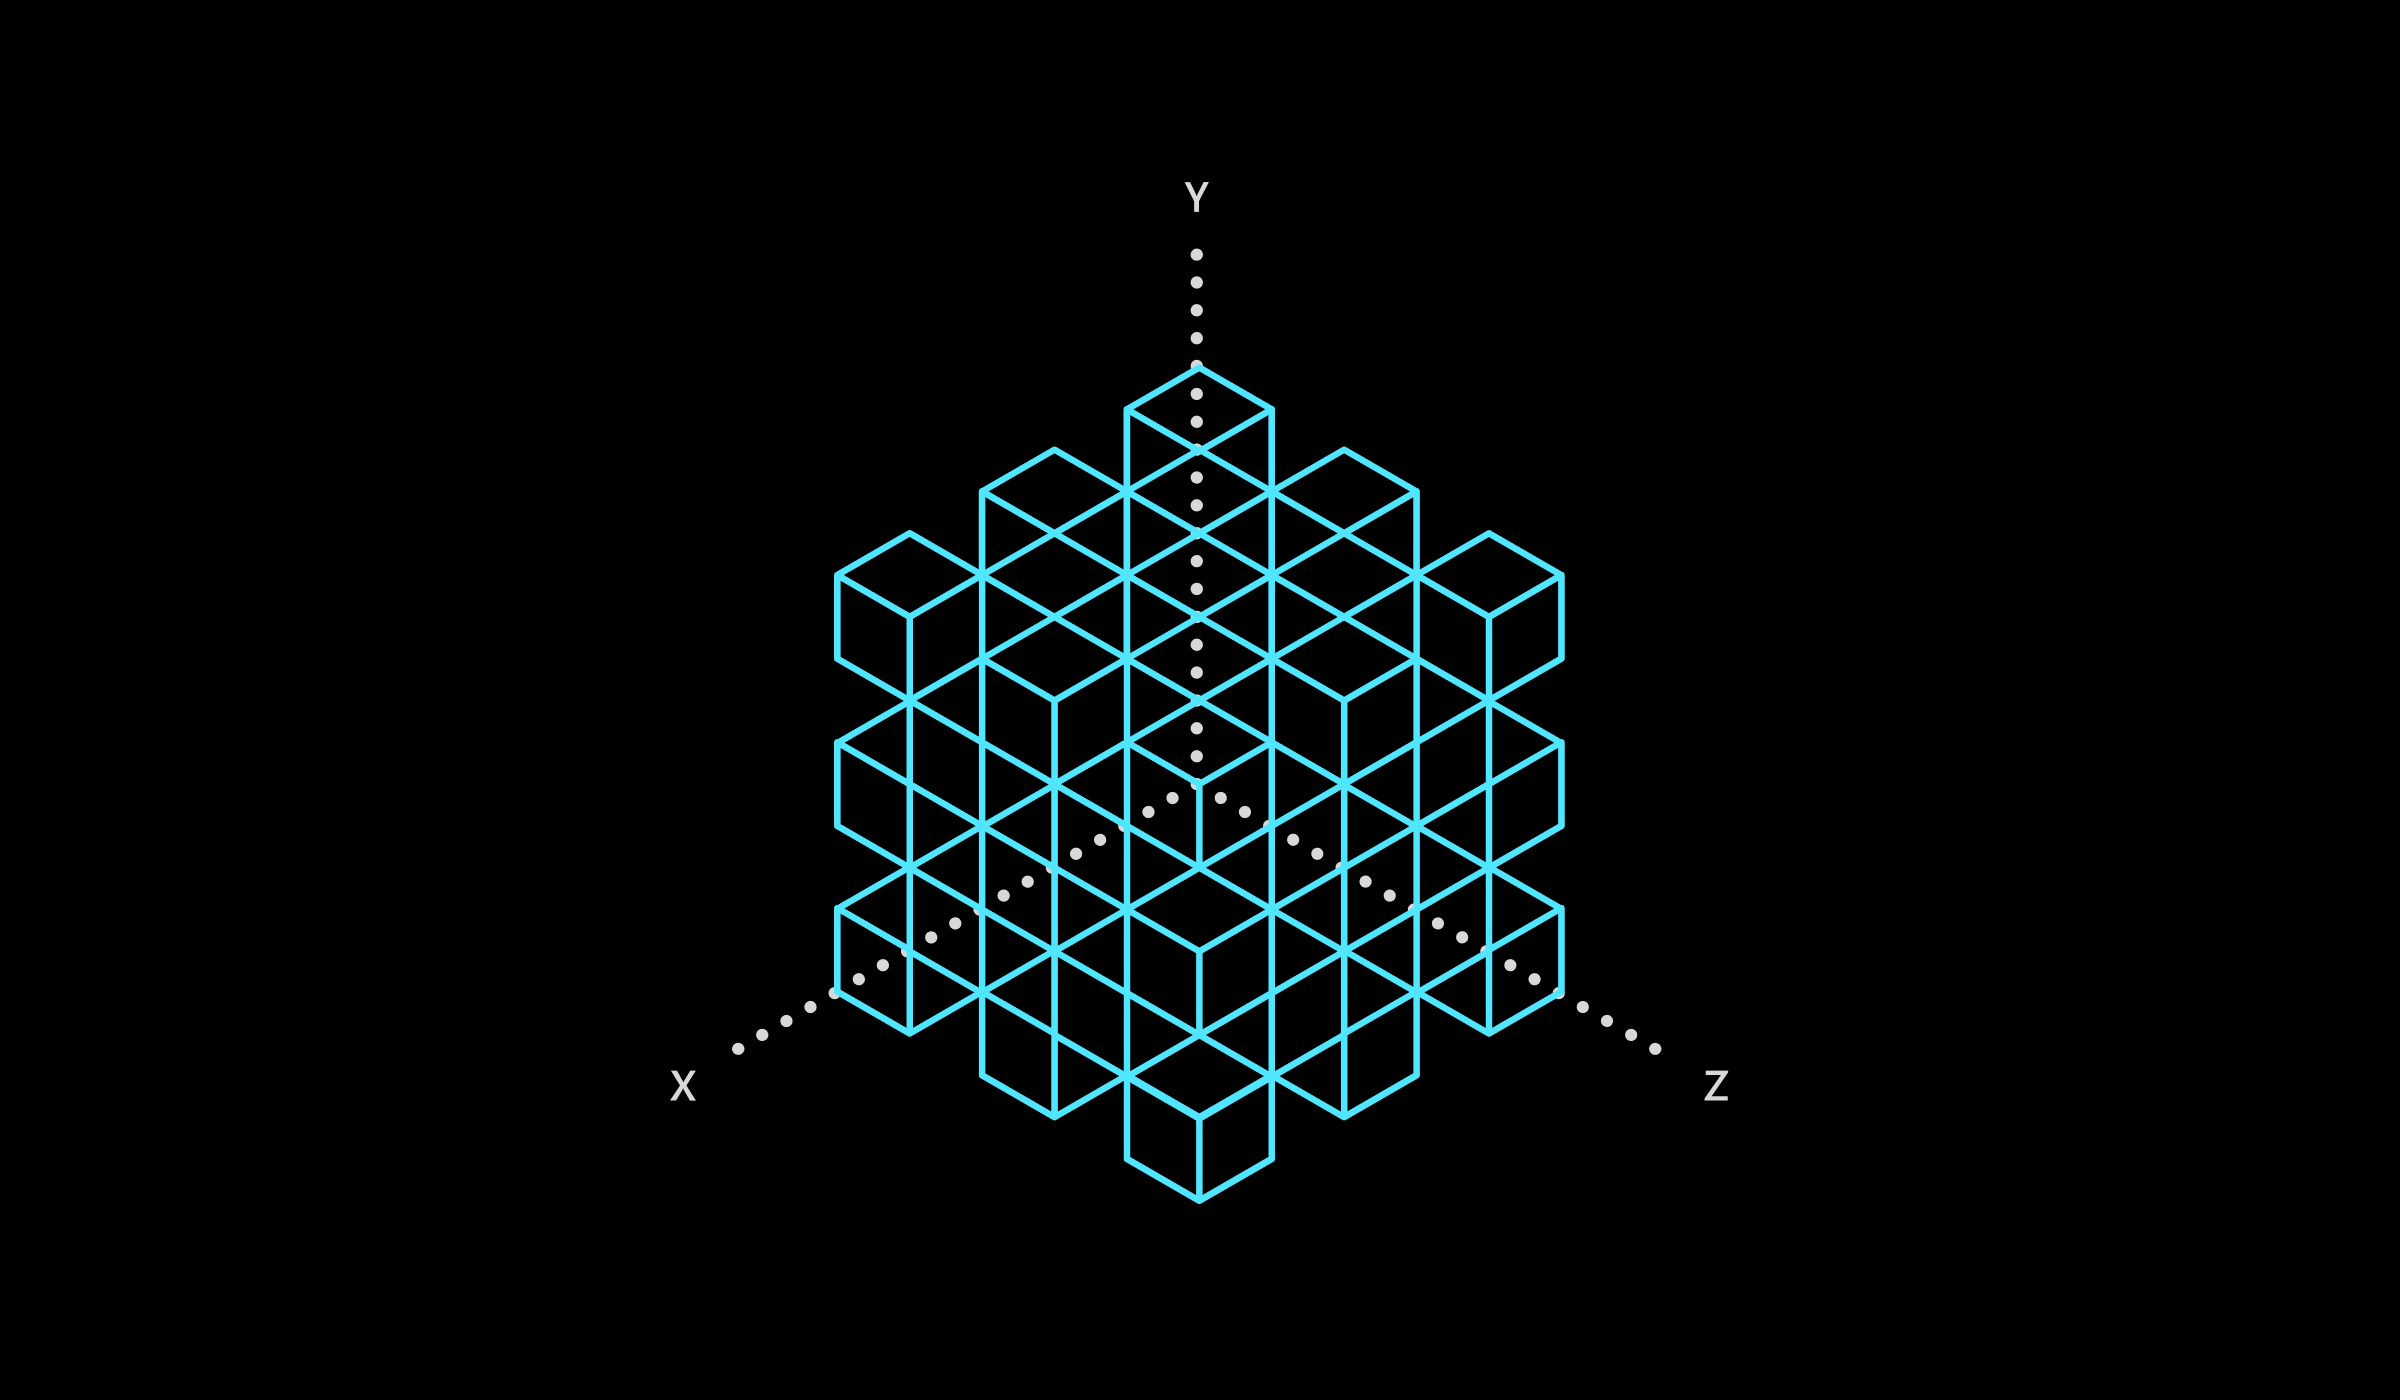 General 2400x1400 black background minimalism digital art mathematics science diamonds cube CGI cyan 3D Blocks abstract 3D Abstract simple background